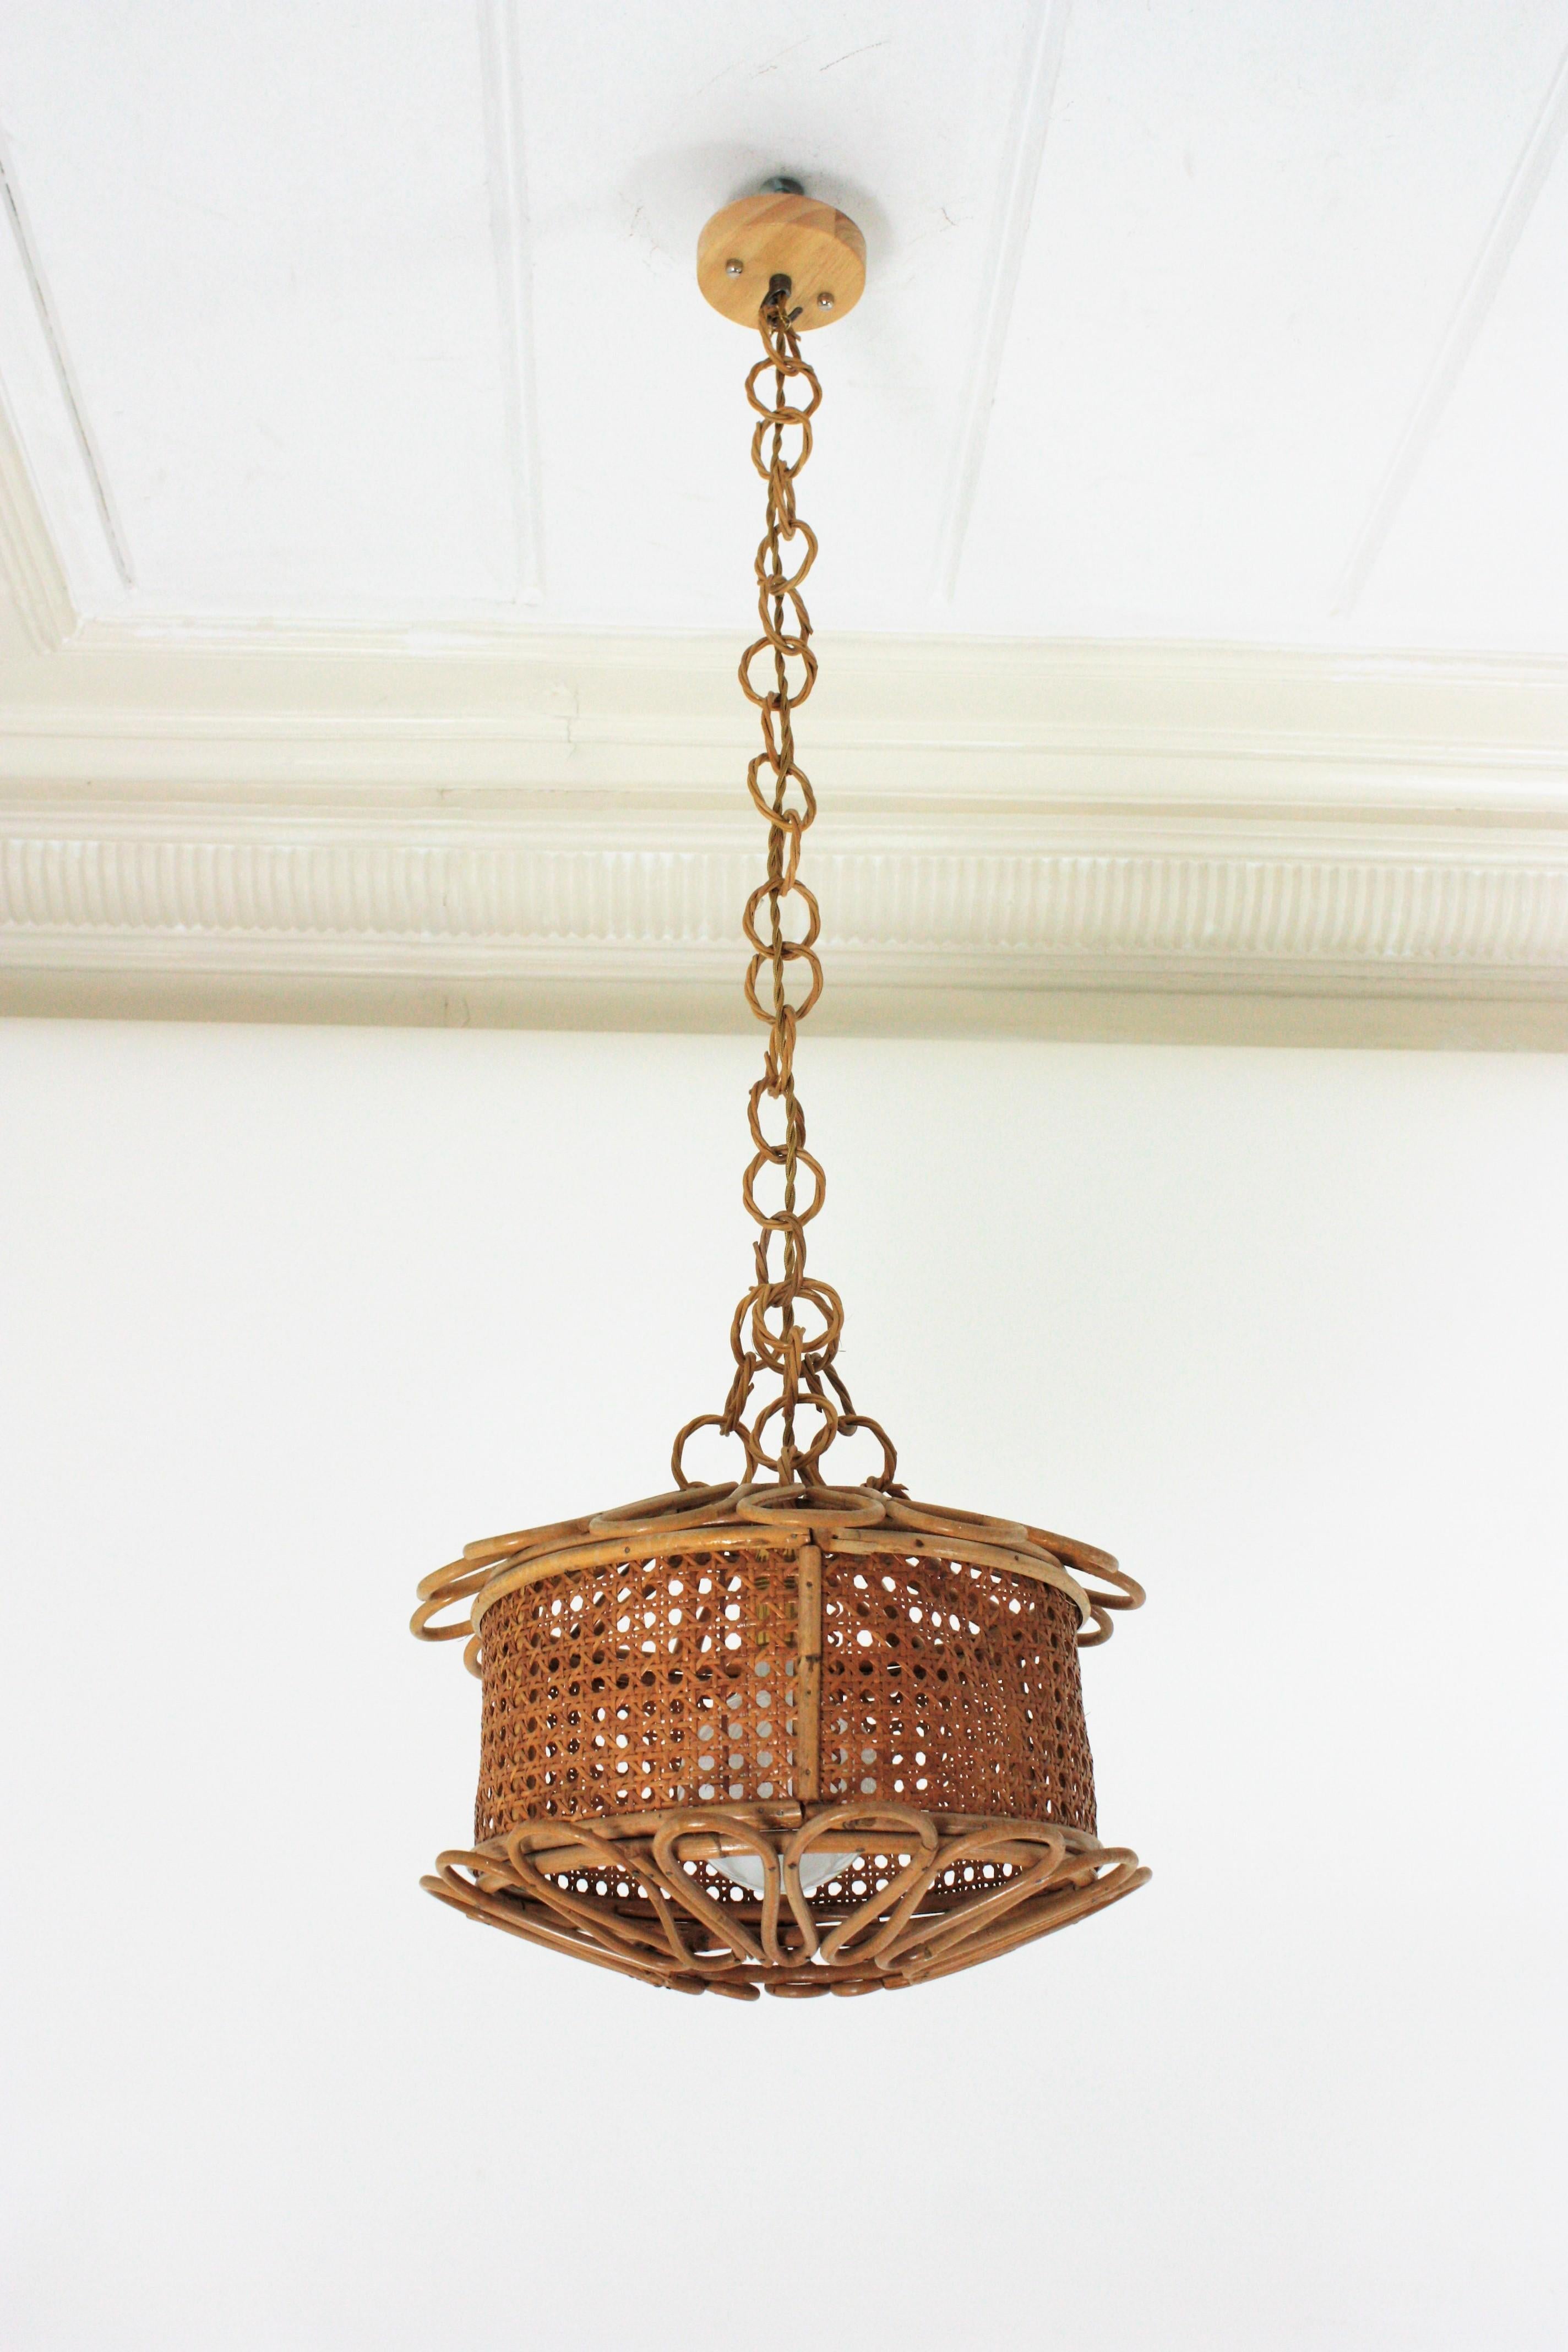 20th Century Italian Modernist Wicker Wire and Rattan Pendant Hanging Light, 1950s